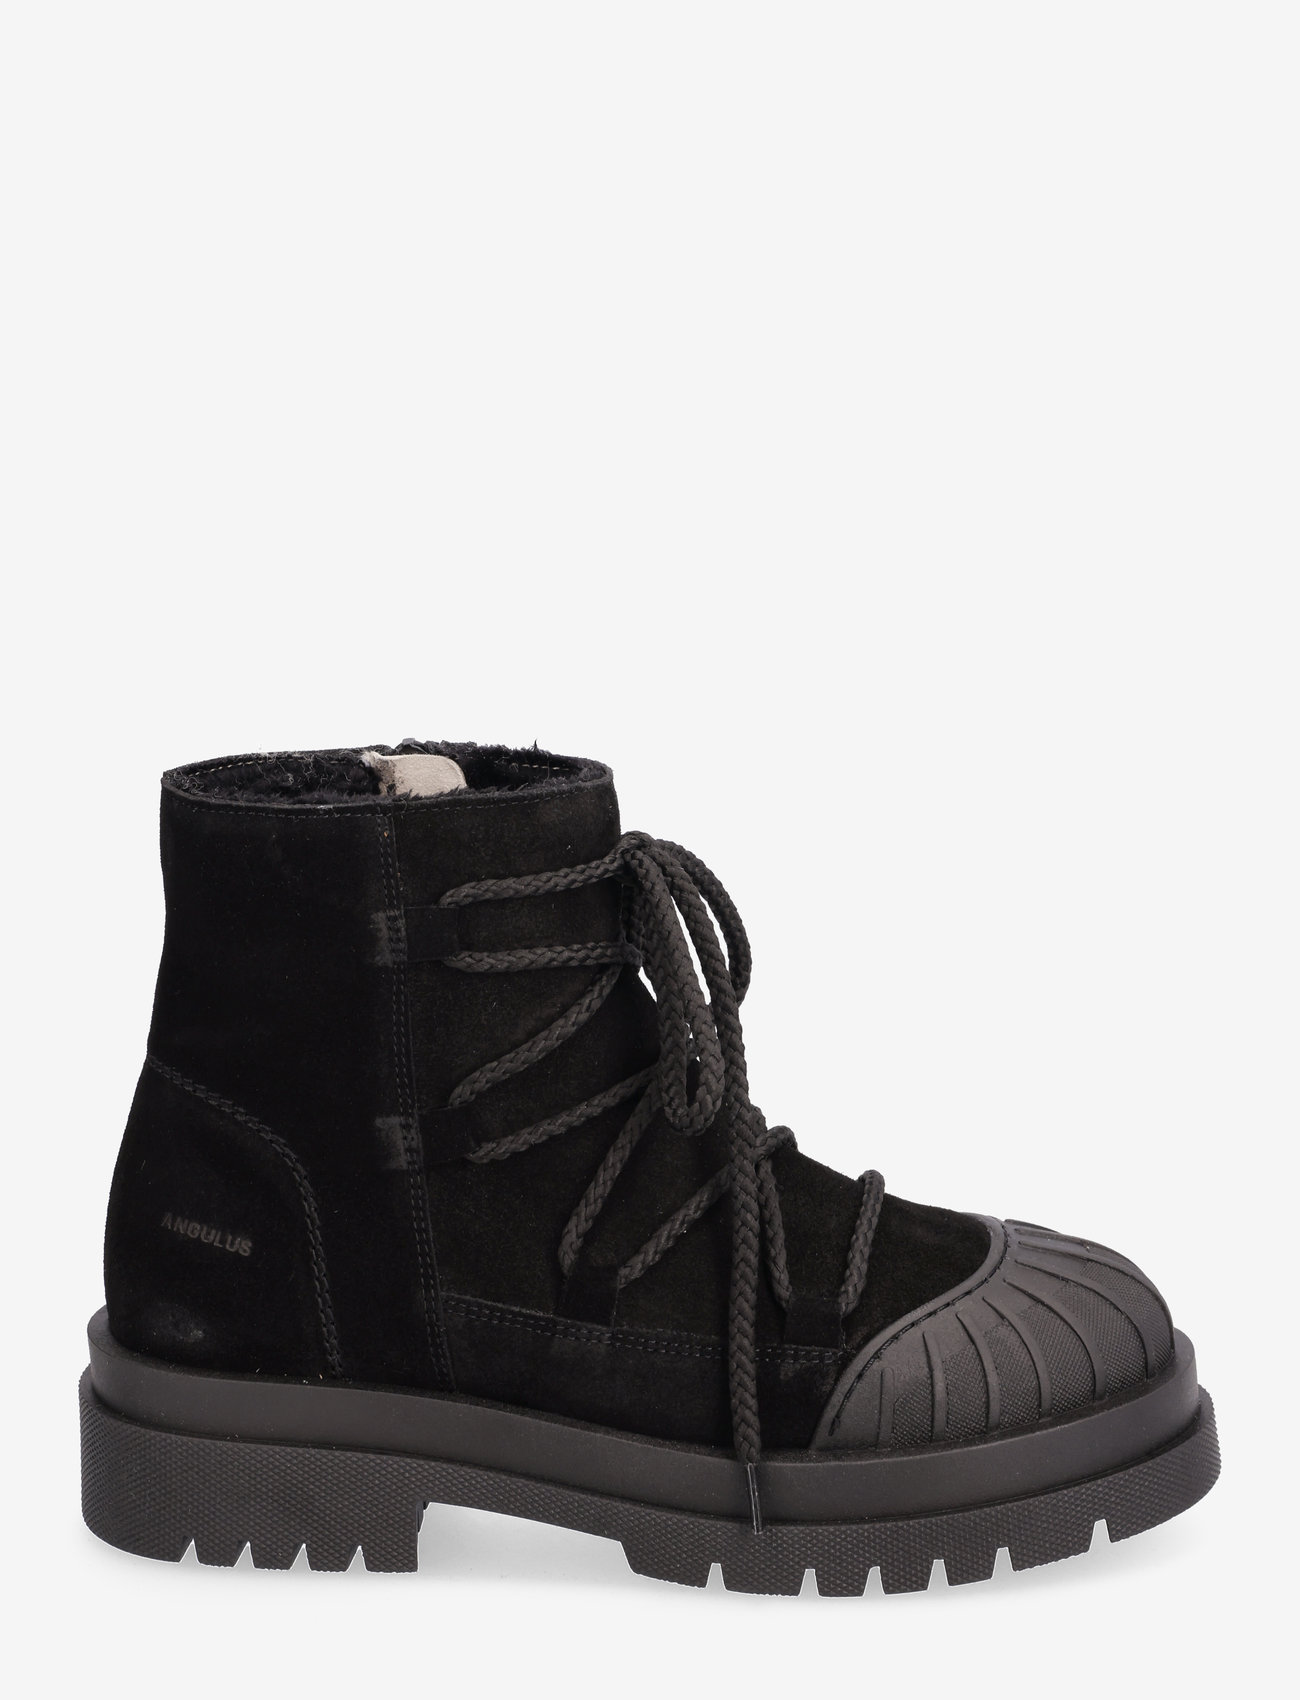 ANGULUS - Boots - flat - buty sznurowane - 1163/2014 black/black lamb woo - 1